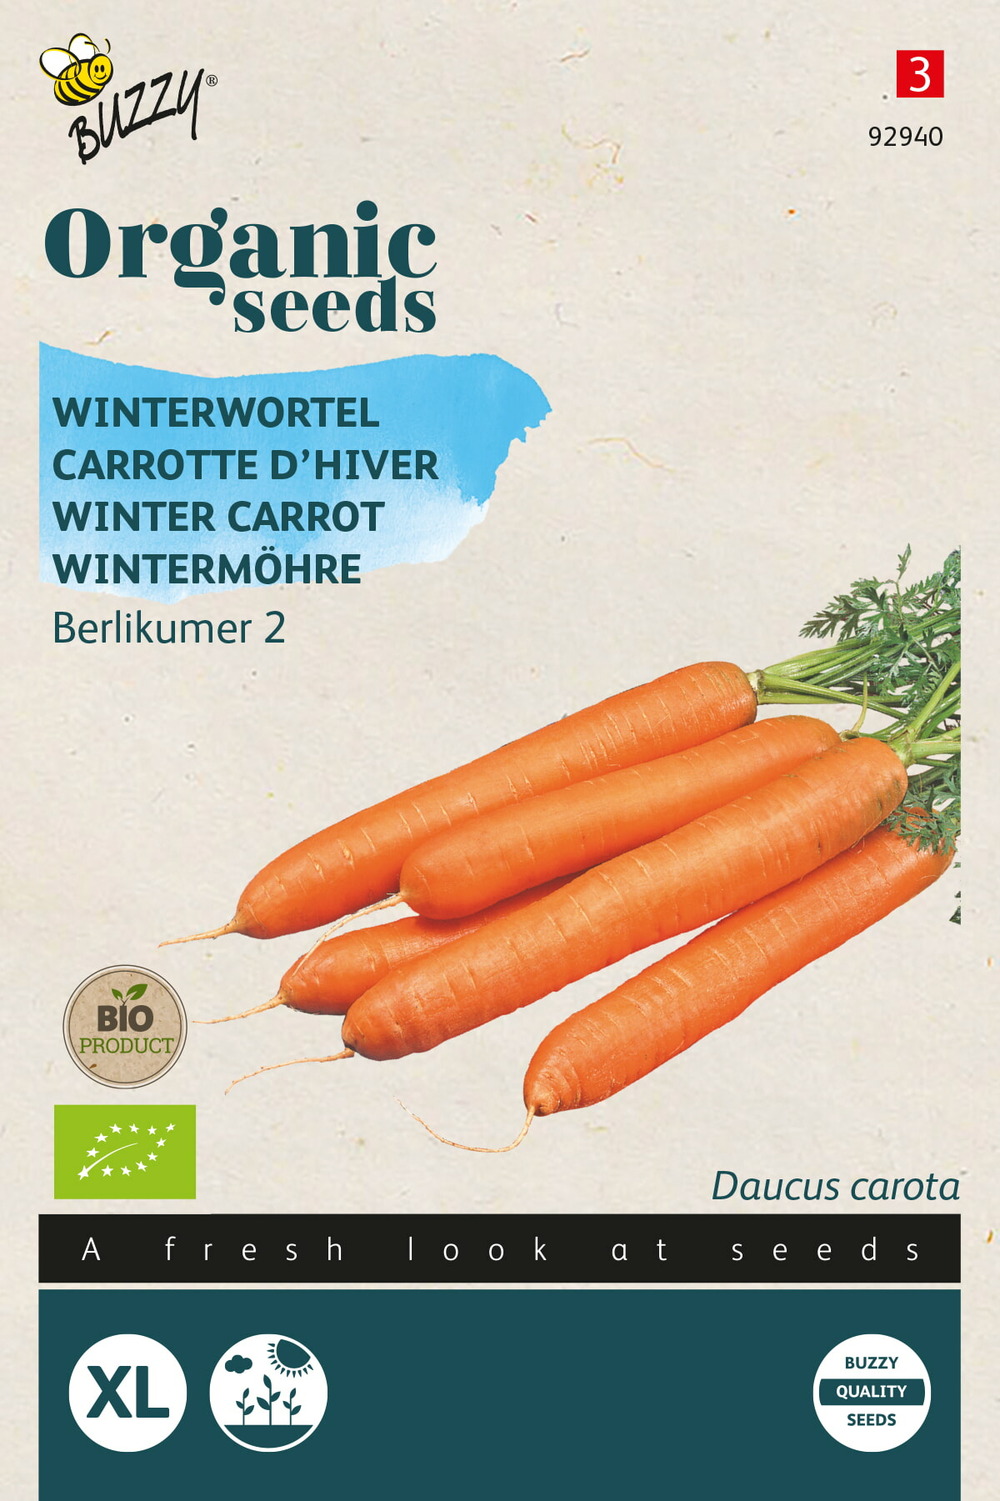 Buzzy organic carrotte d’hiver berlicum 2 (bio) - ca. 1,5 gr